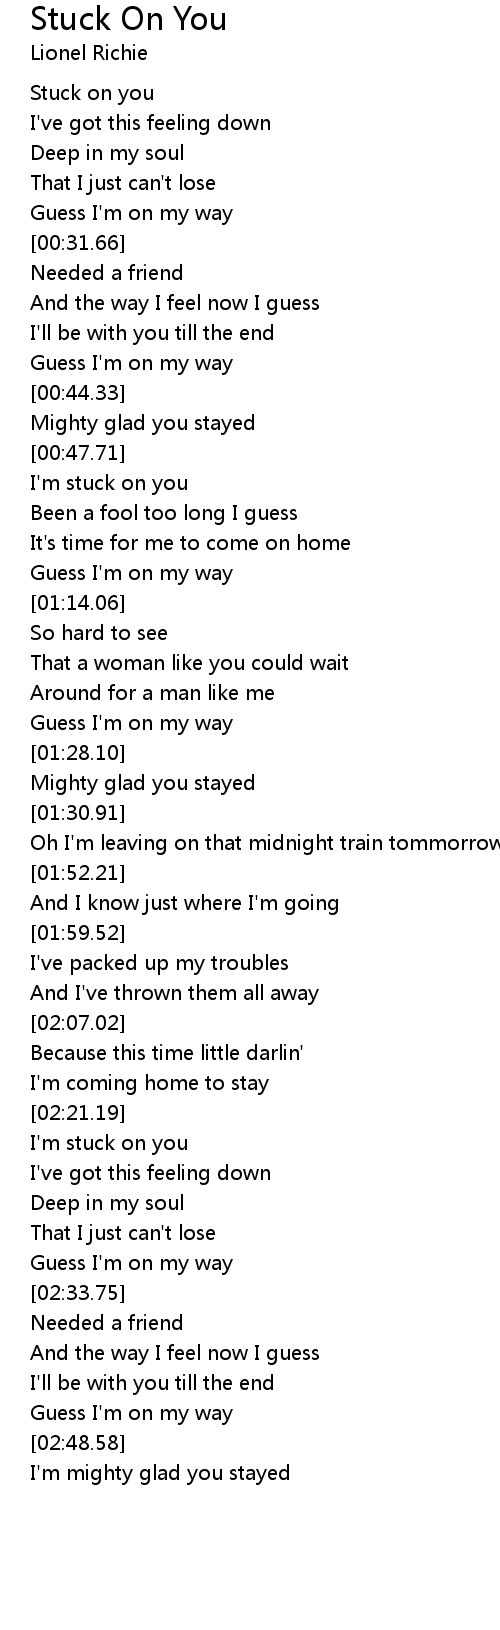 Stuck on You - Lionel Richie - With Lyrics (English) 